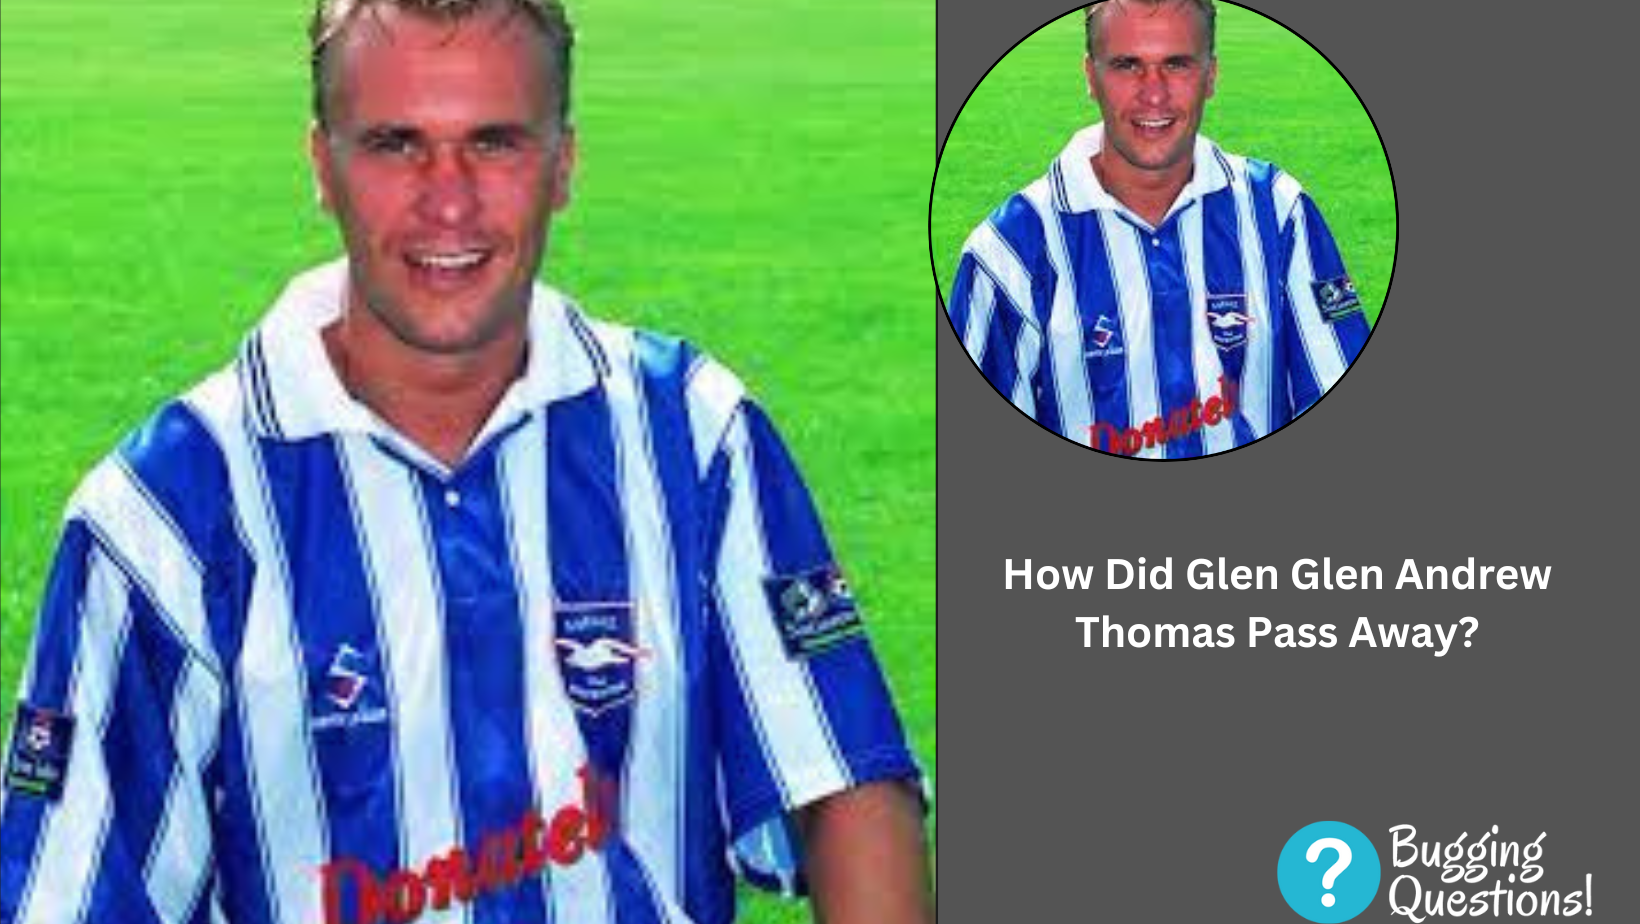 How Did Glen Glen Andrew Thomas Pass Away?